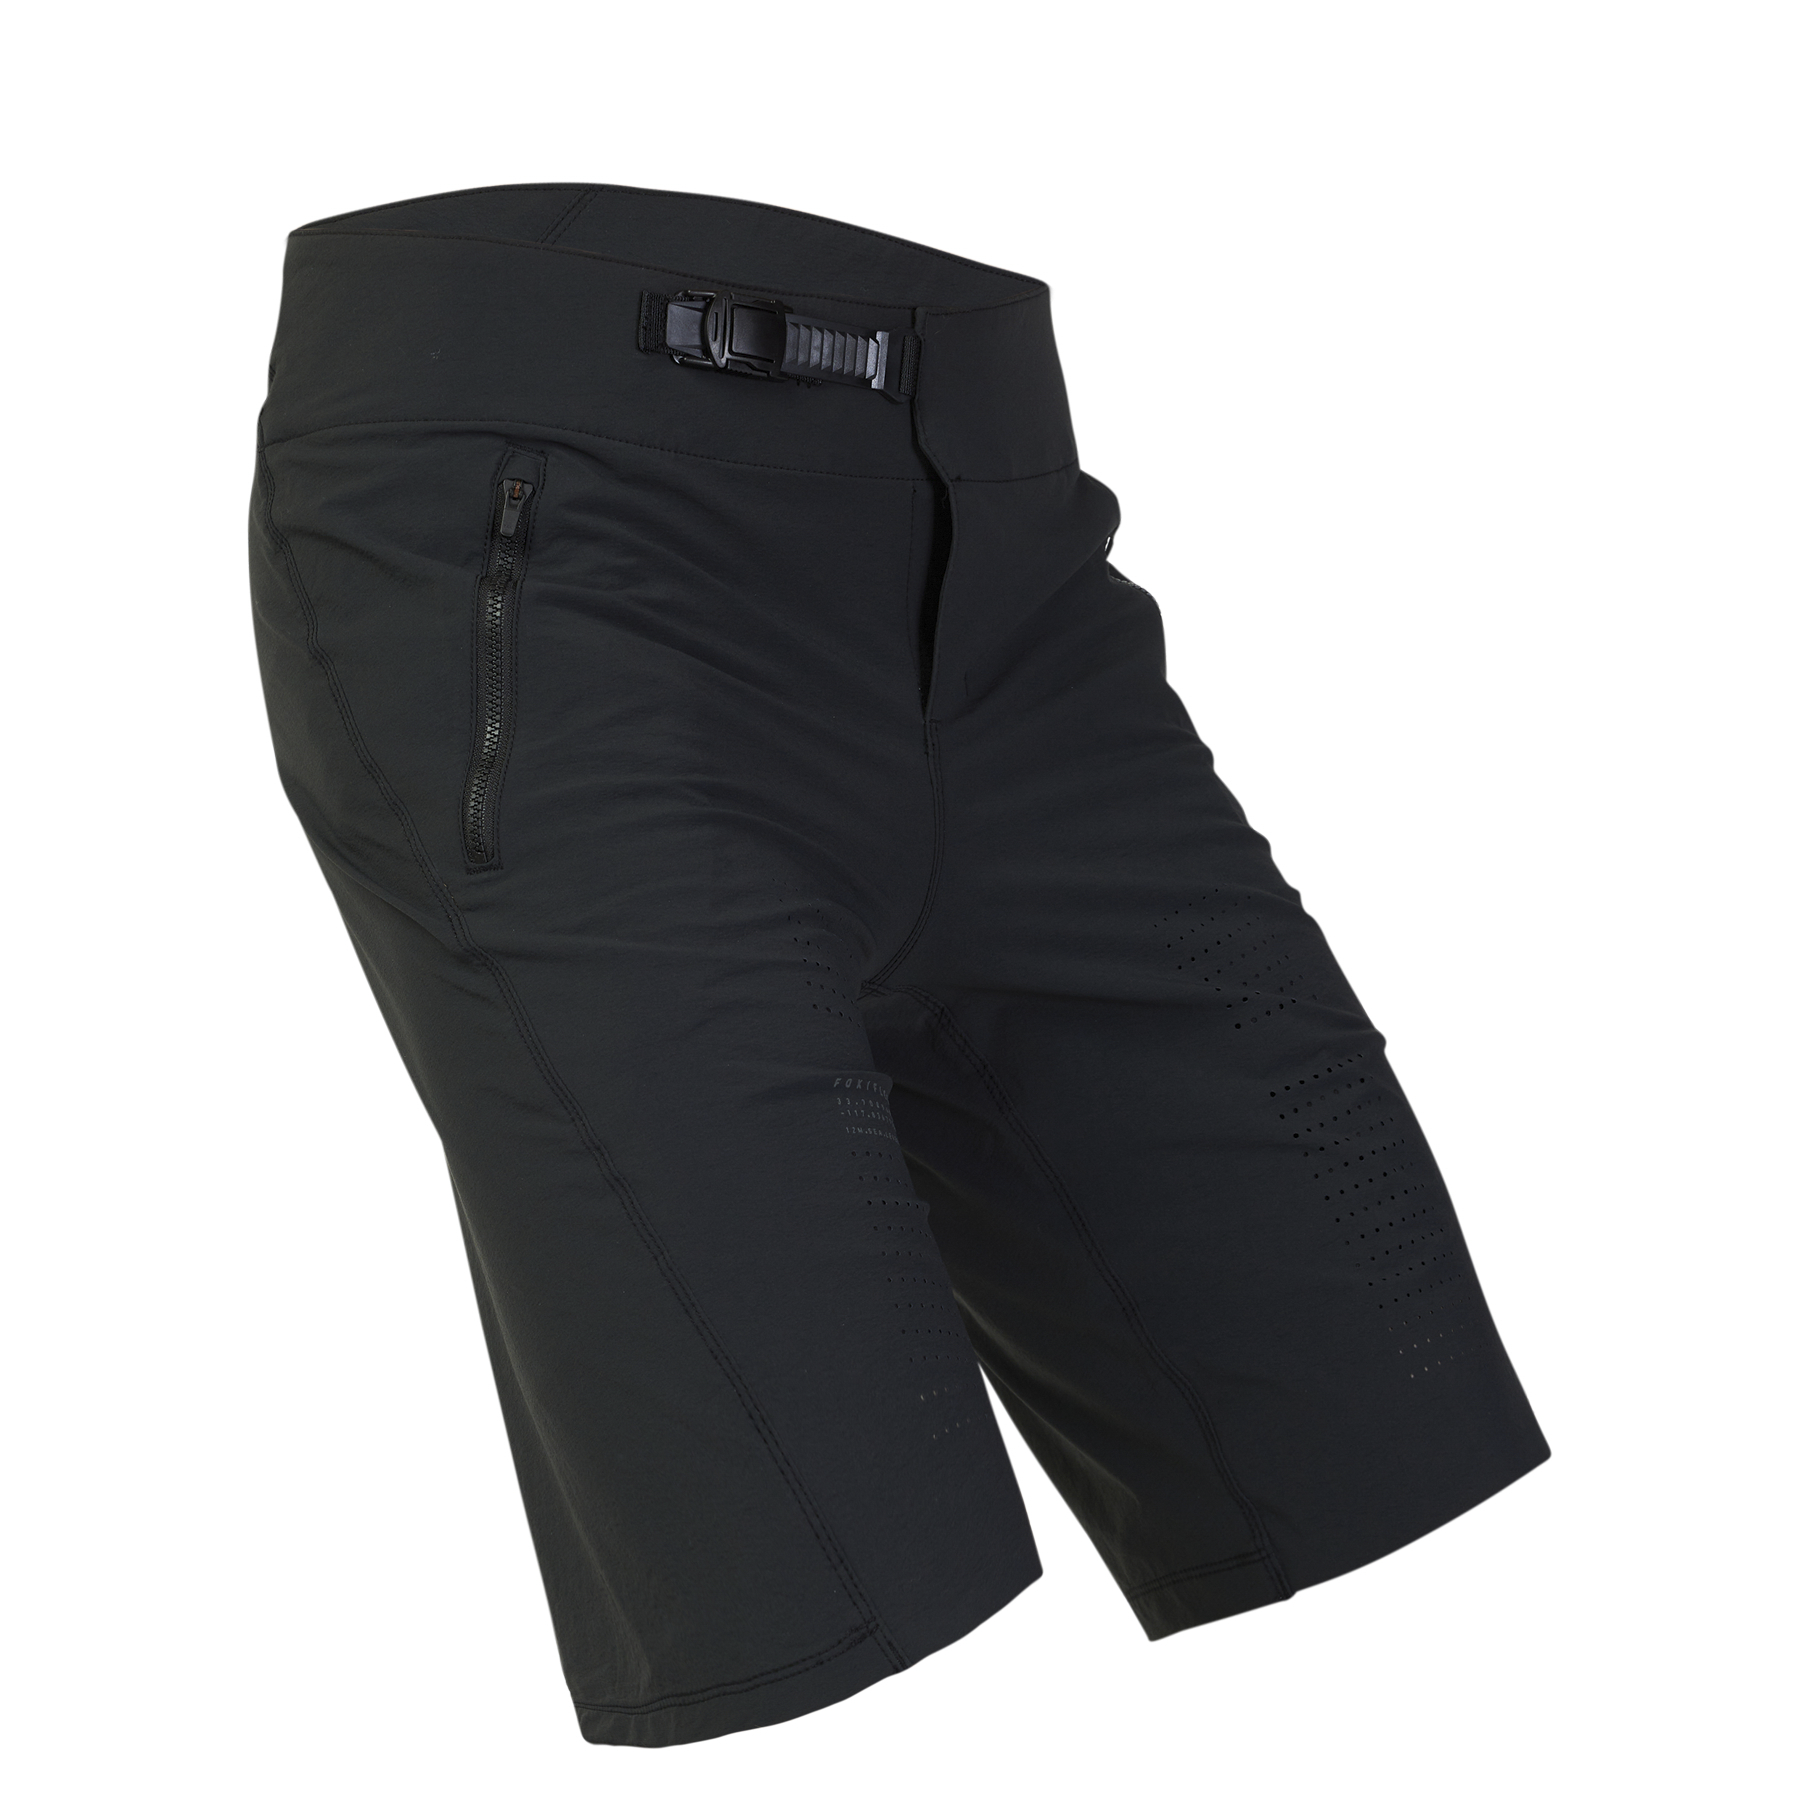 Fox Flexair Shorts With Liner - XL-36 - Black - Image 1